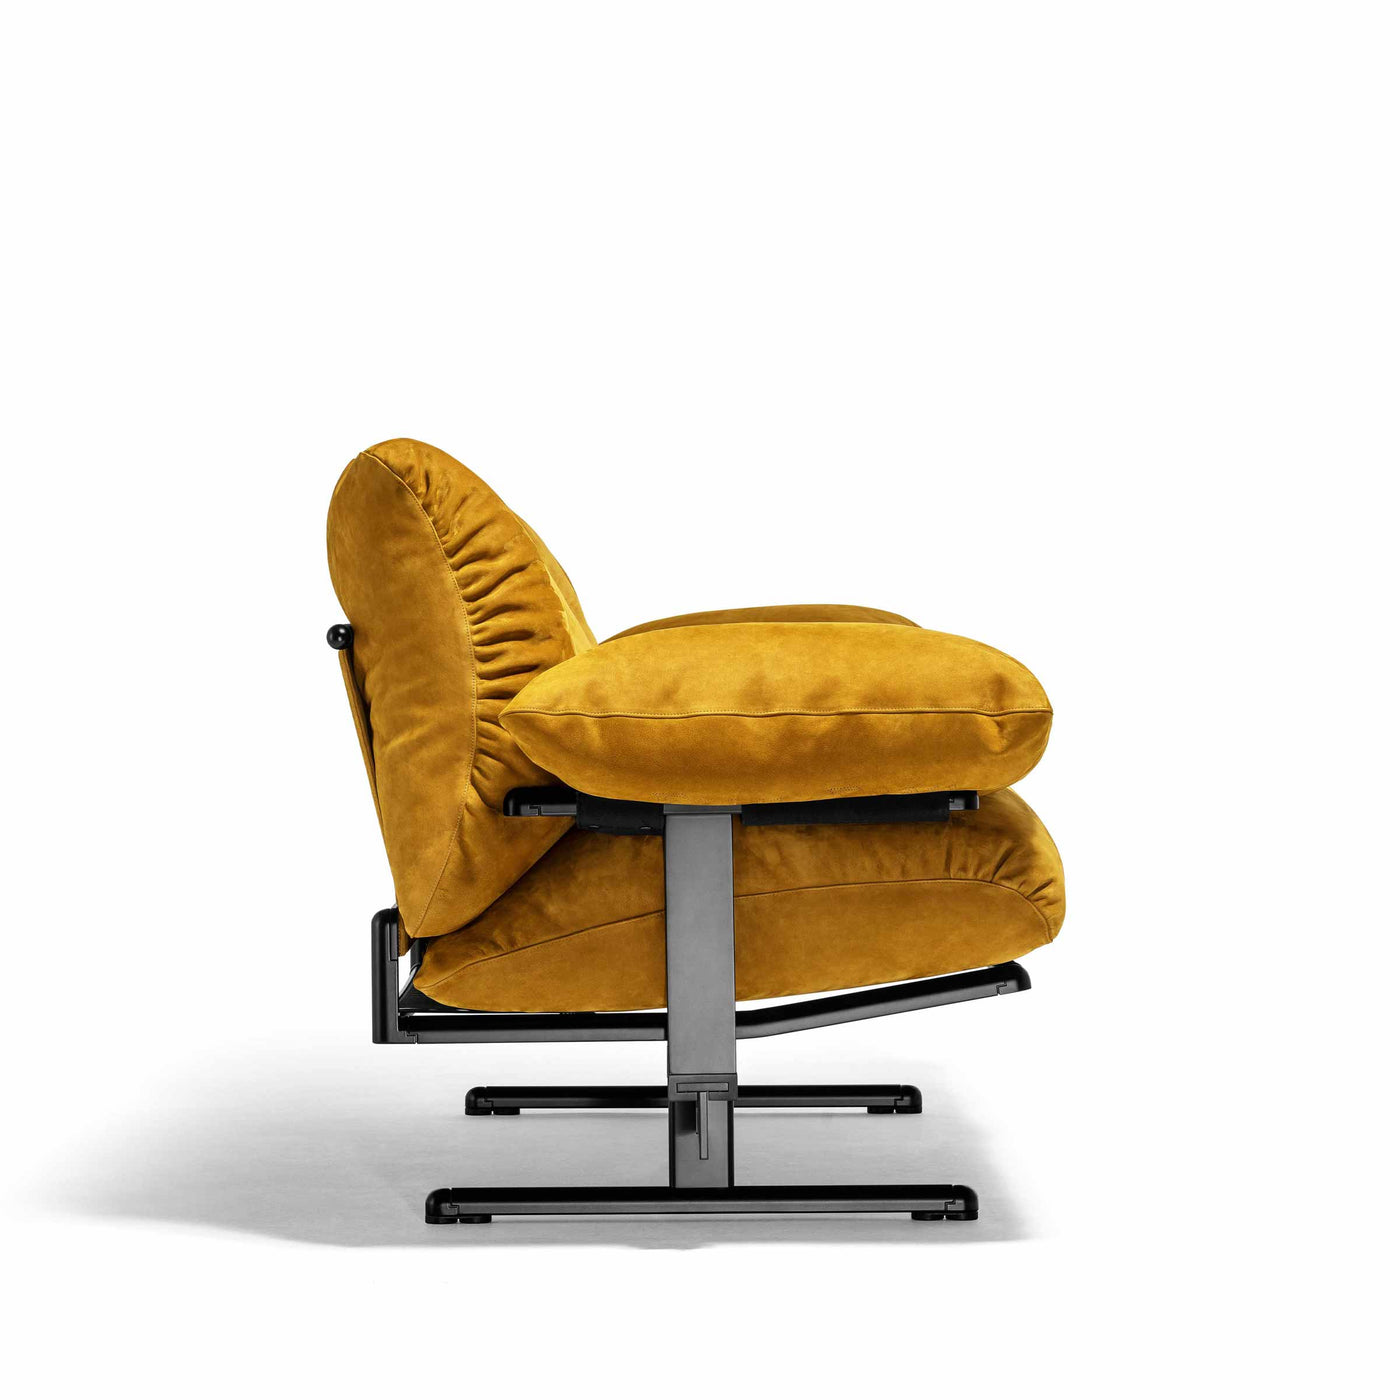 Leather Sofa OUVERTURE by Pierluigi Cerri for Poltrona Frau 03